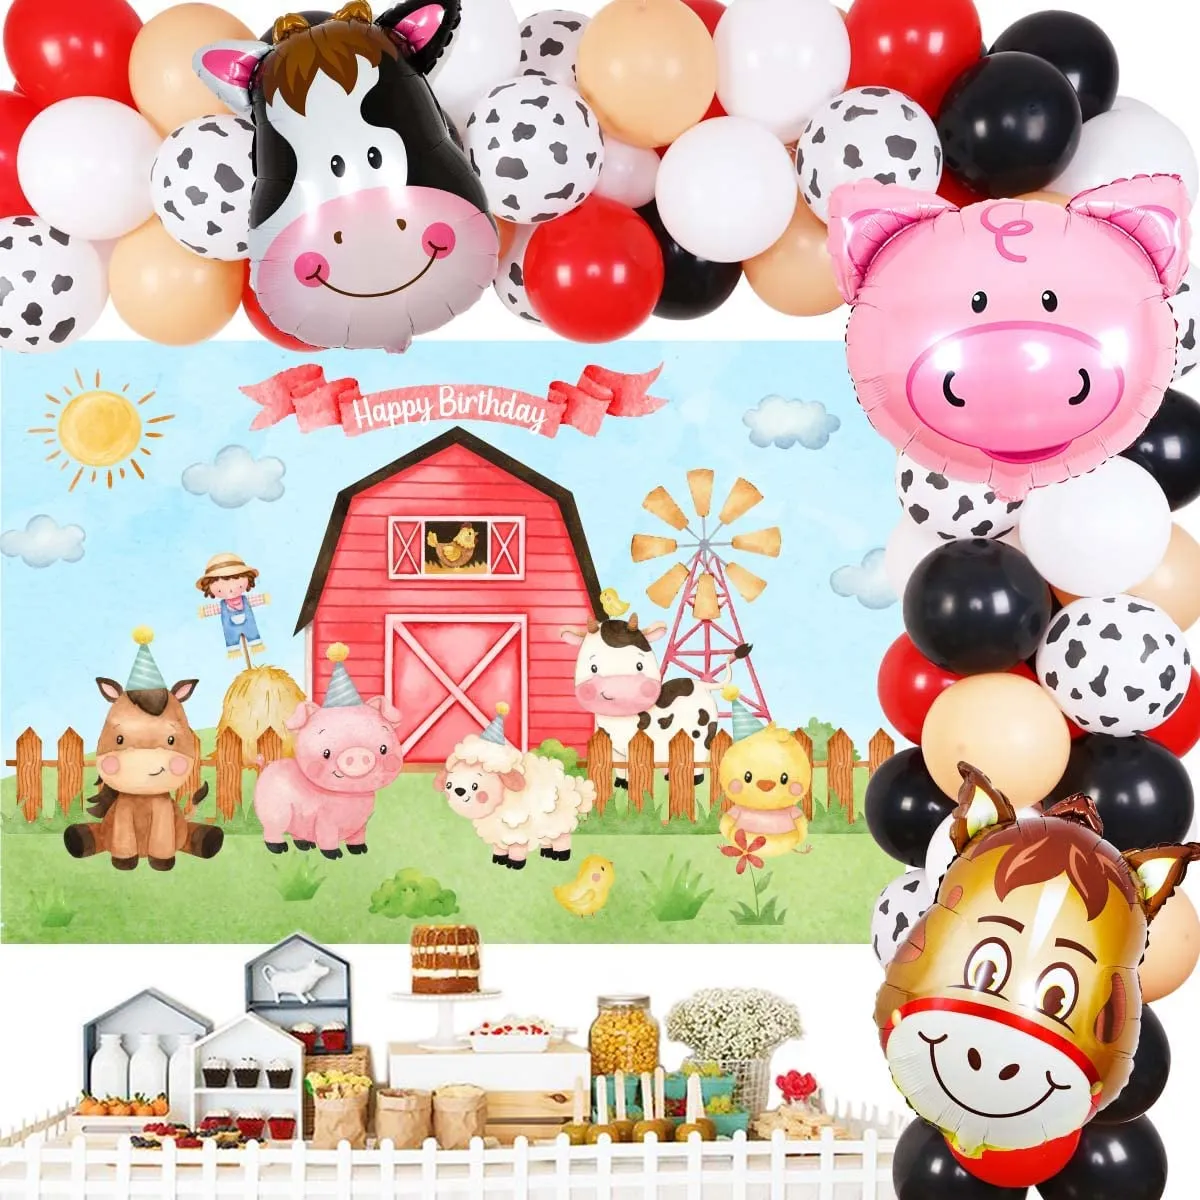 SURSURPRISE Farm Animal Party Decorations for Boy, Farm Theme Birthday  Decorations - Red and Black Balloon Garland Kit, Cartoon Farm Animals  Backdrop, Animal Foil Balloons for 1st 2nd 3rd Birthday Party |